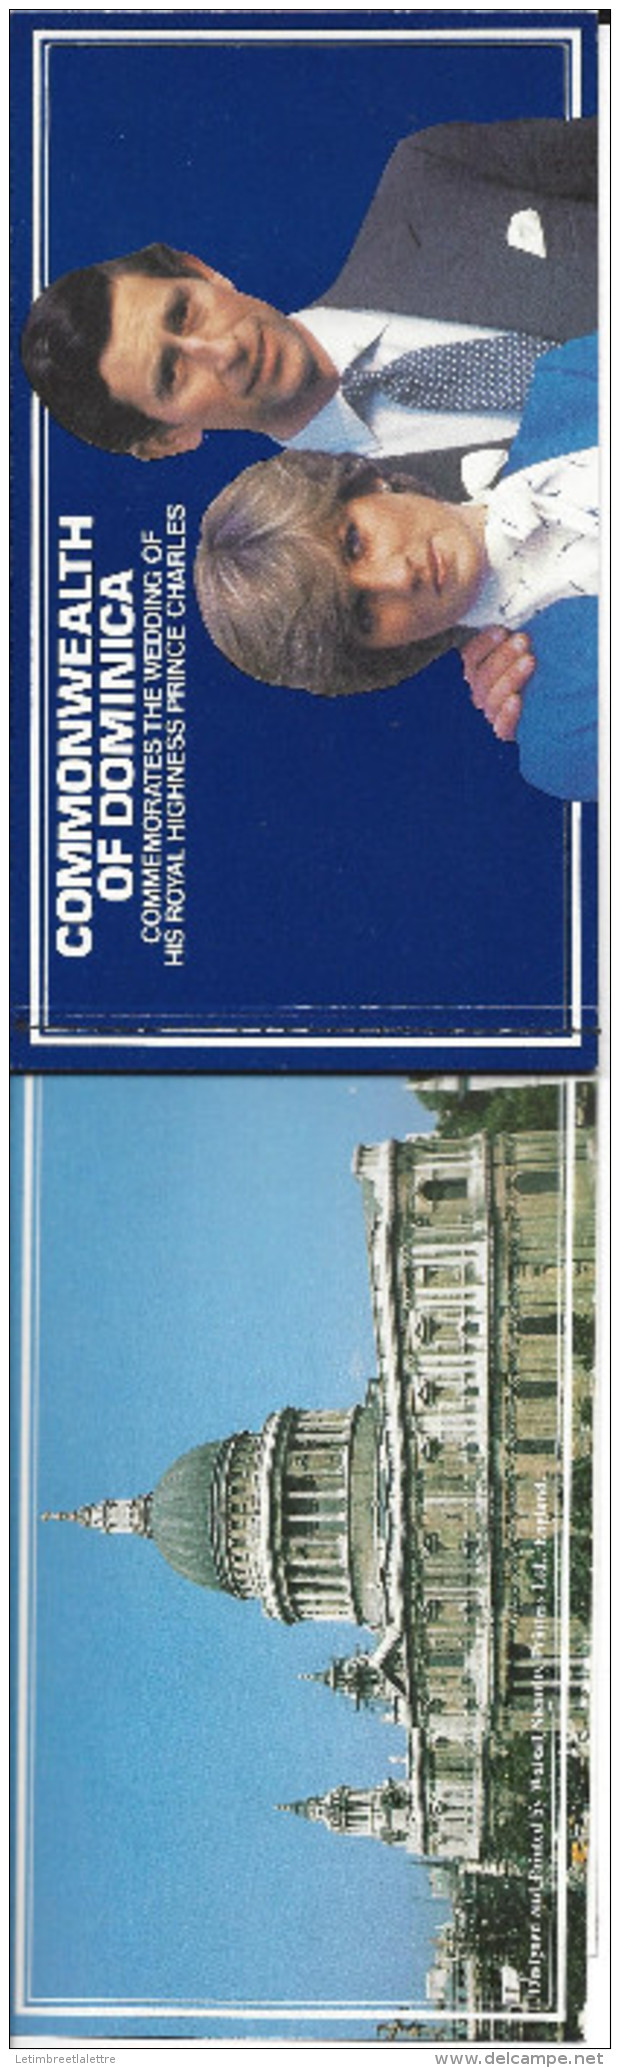 Commonwealth Of Dominica 1981 ** MNH Booklet - Royal Wedding Princ Charles & Princess Diana - Familles Royales